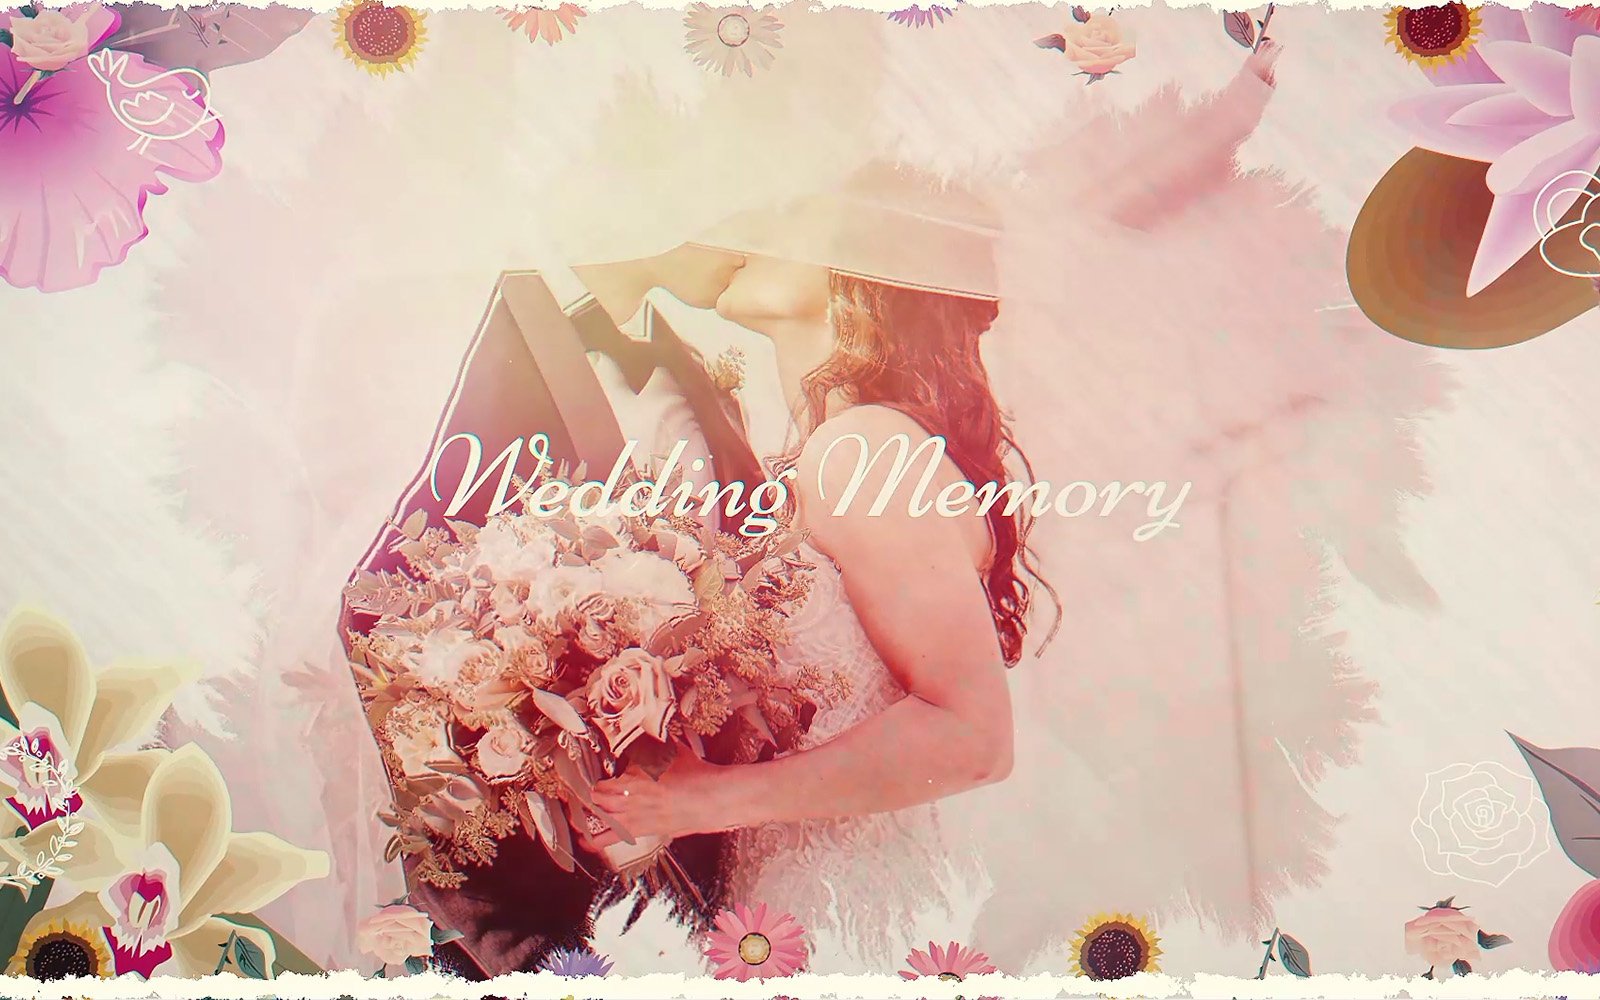 Wedding Memory: (Mogrt) Premiere Pro template